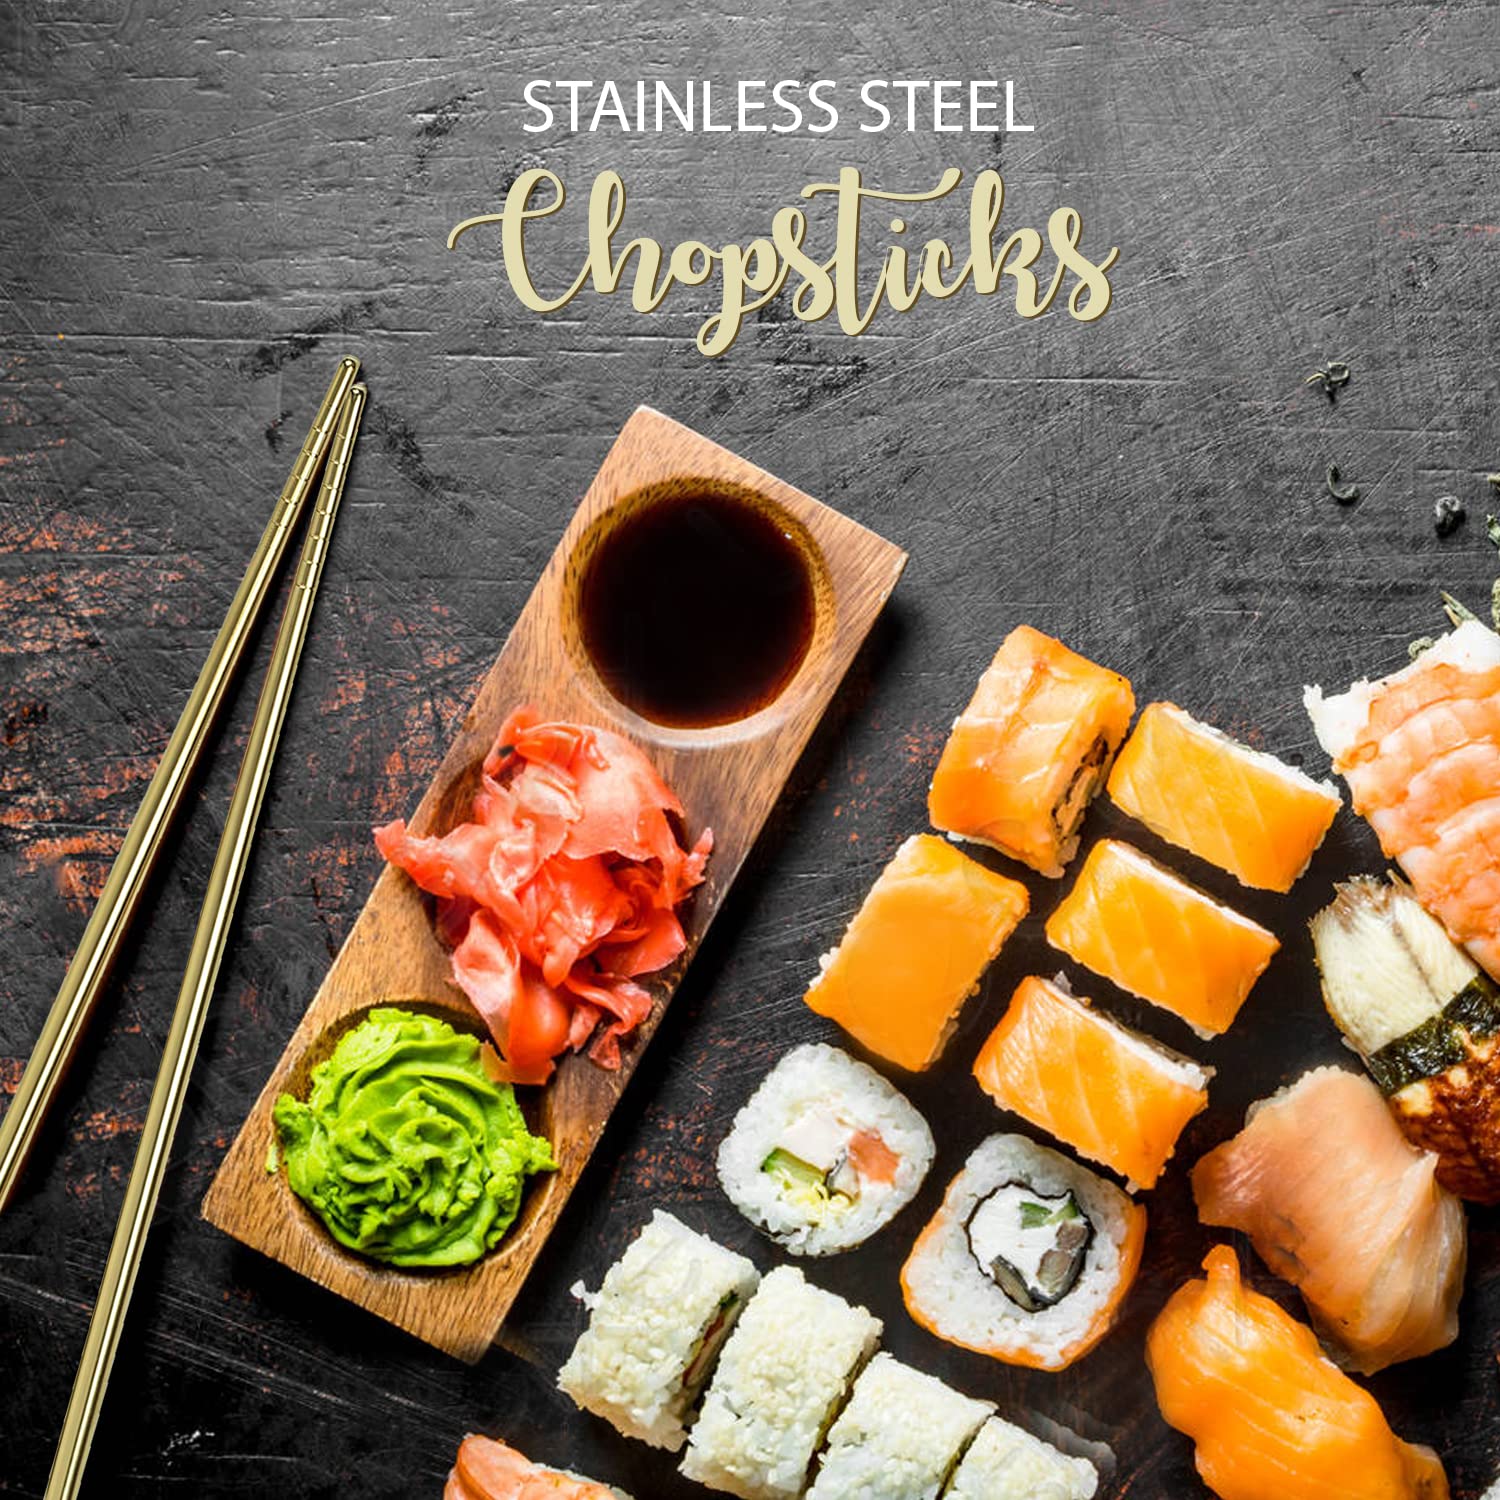 Helen's Asian Kitchen Stainless Steel Chopsticks, Set of 5-Pair, One Size, Gold